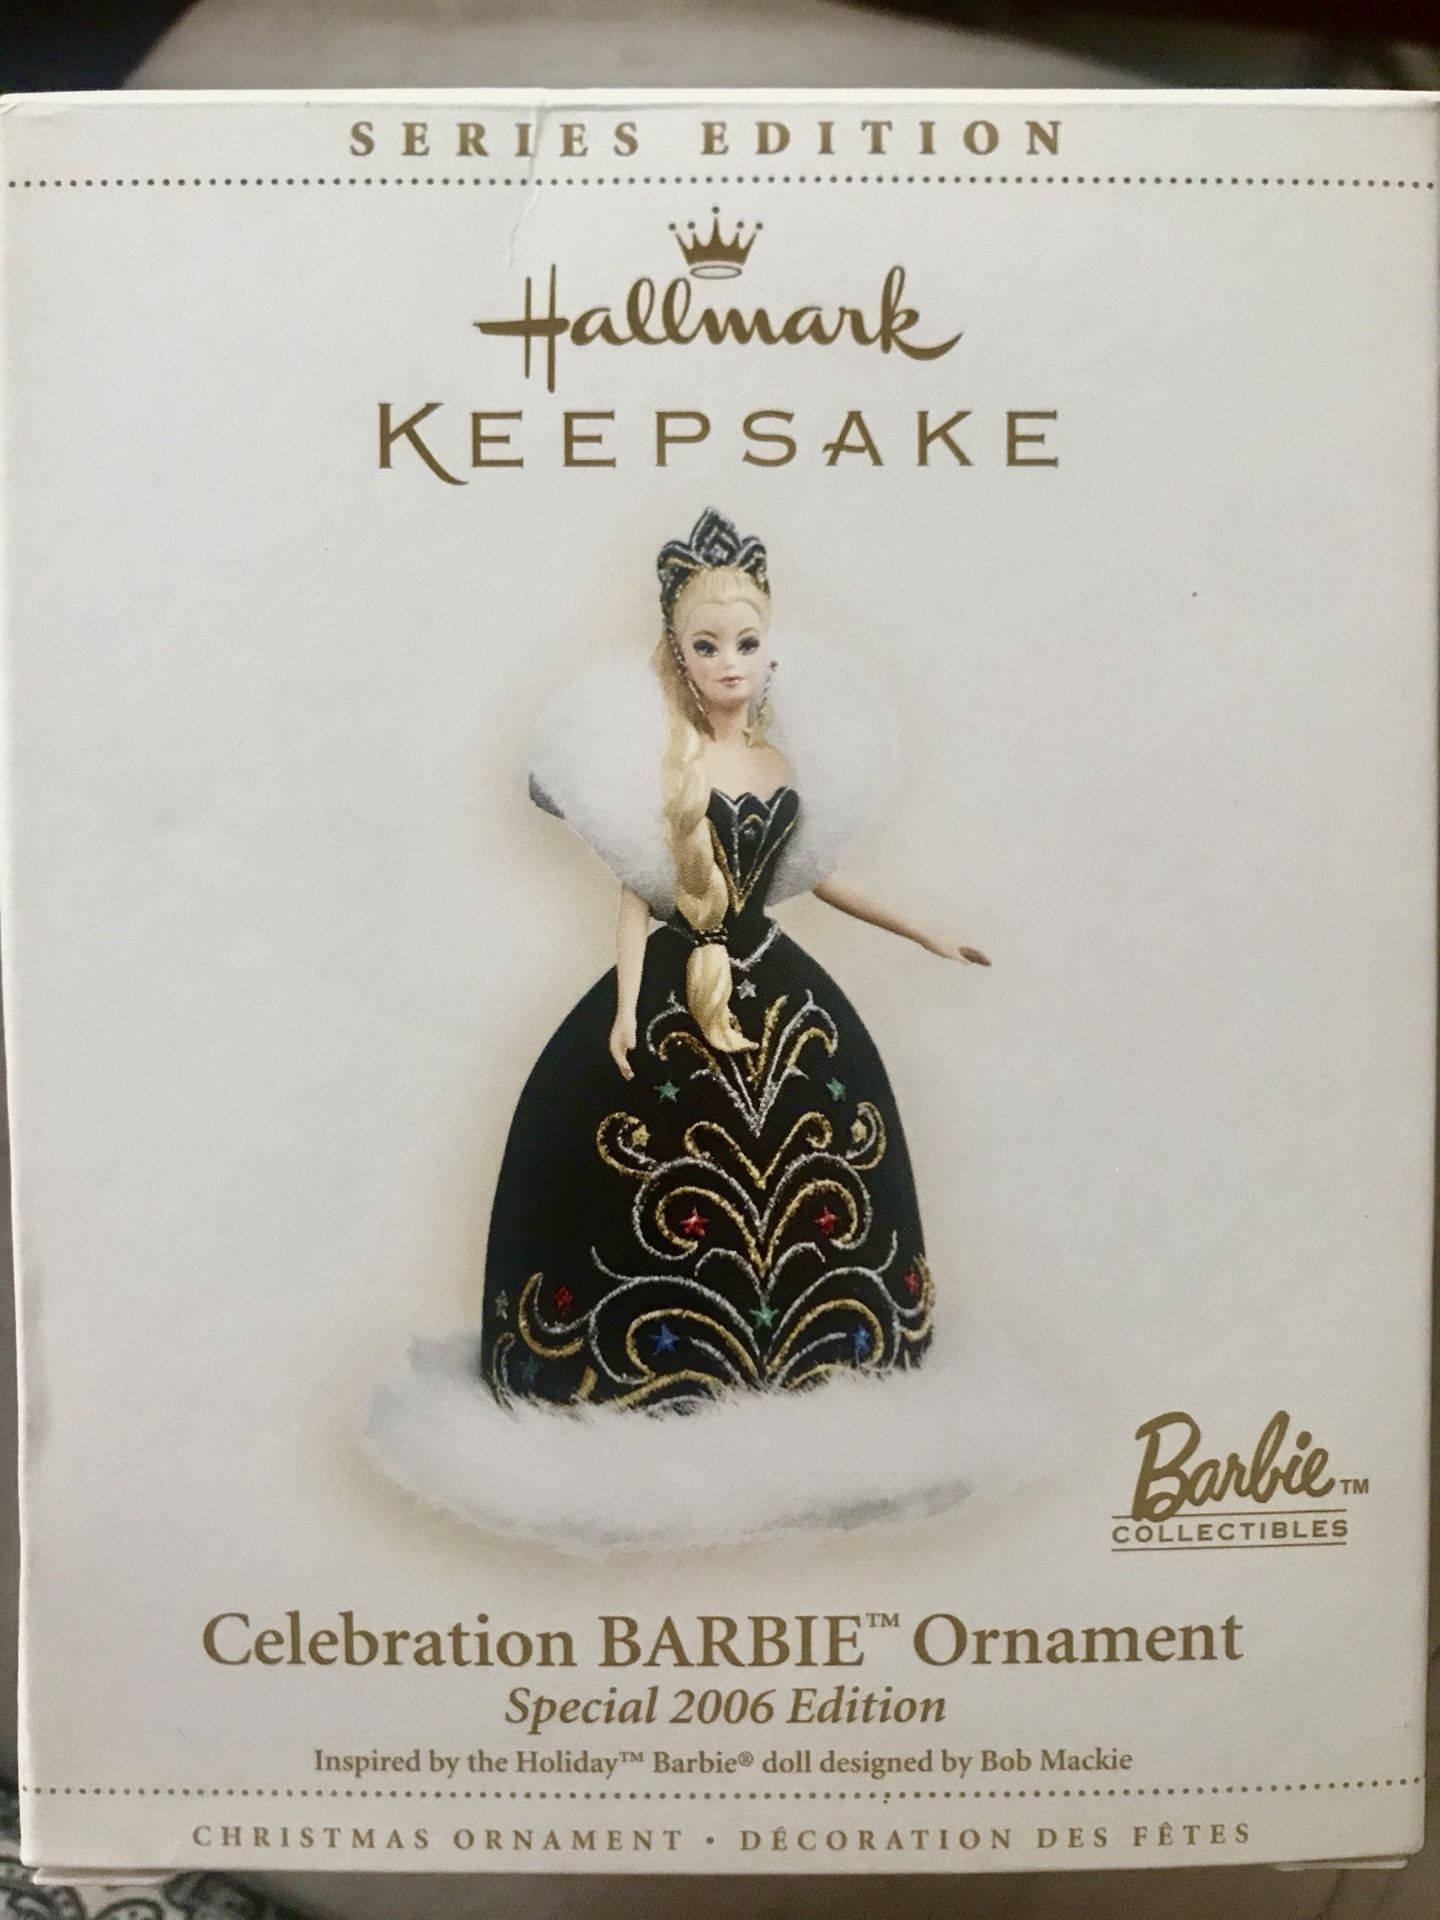 Hallmark Keepsake 2006 Celebration Barbie Ornament by Bob Mackie